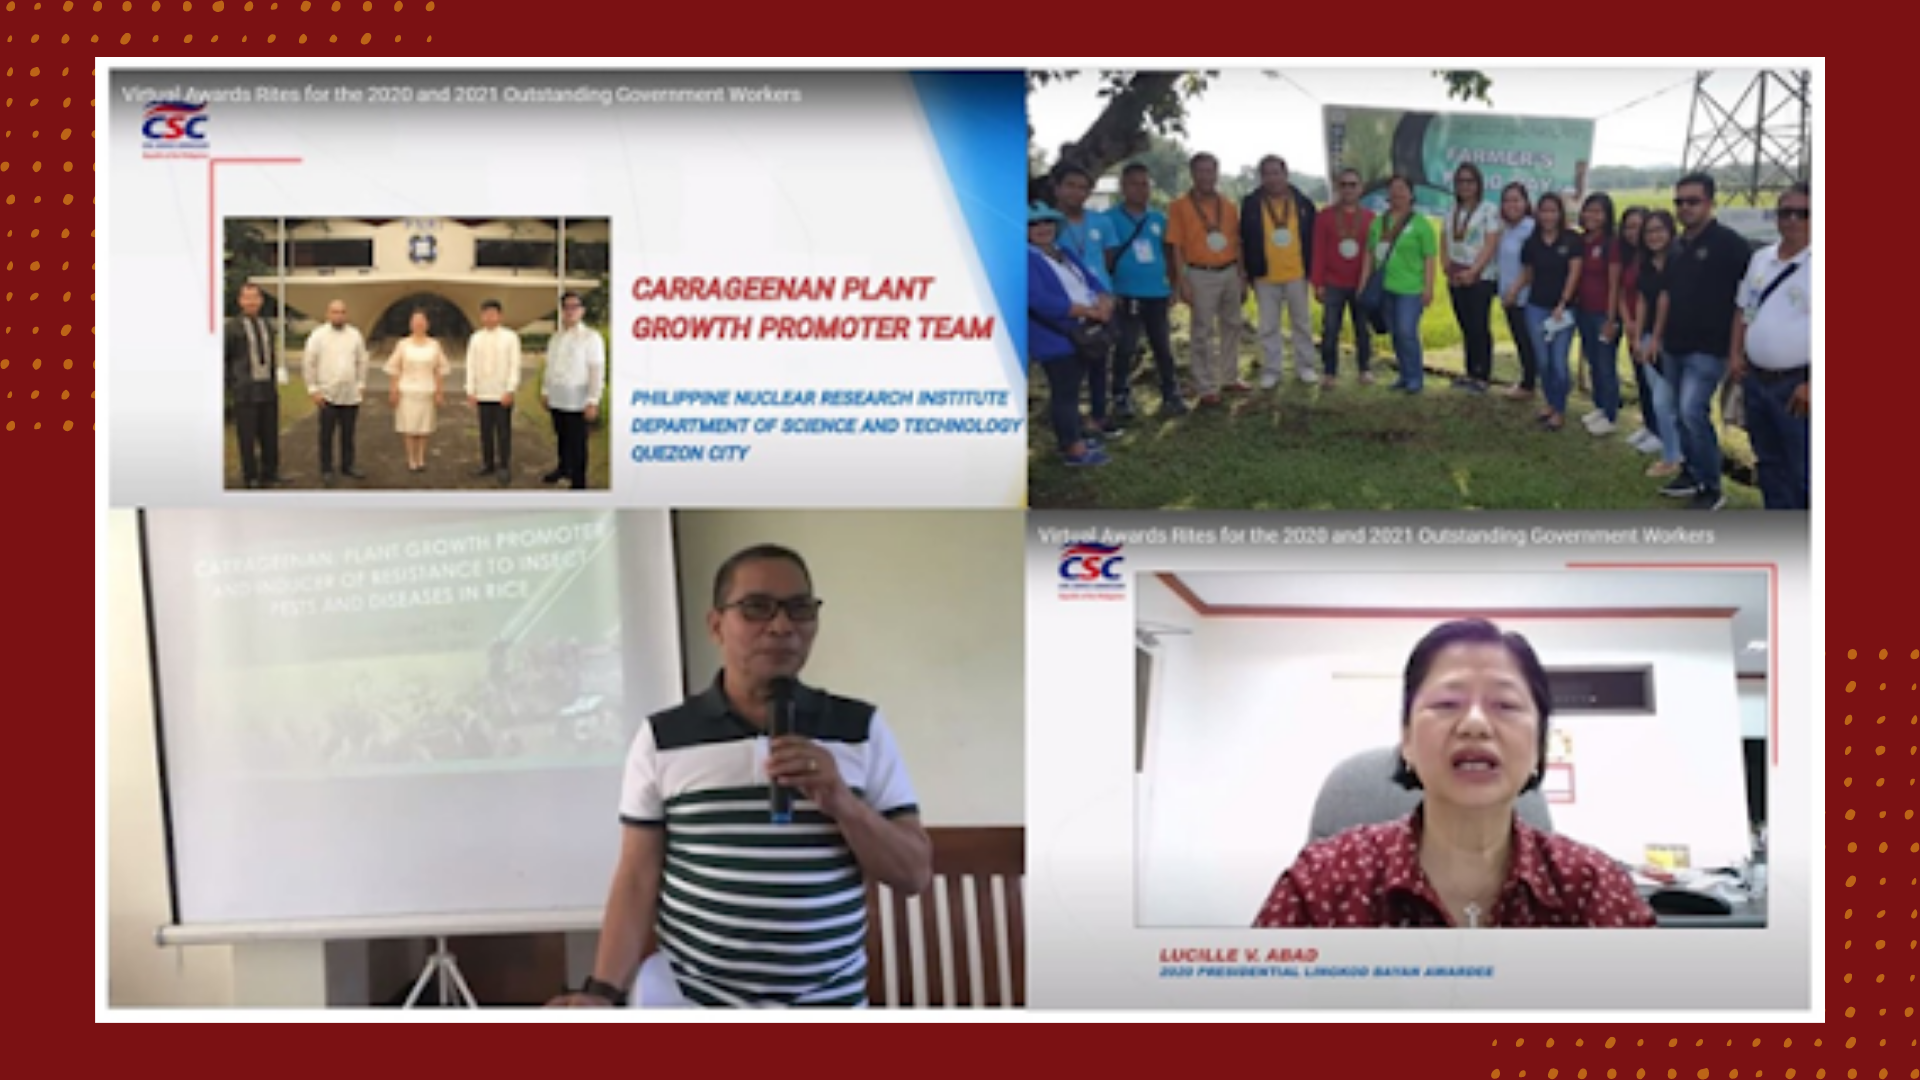 Carrageenan PGP Team wins 2020 Presidential Lingkod Bayan Award